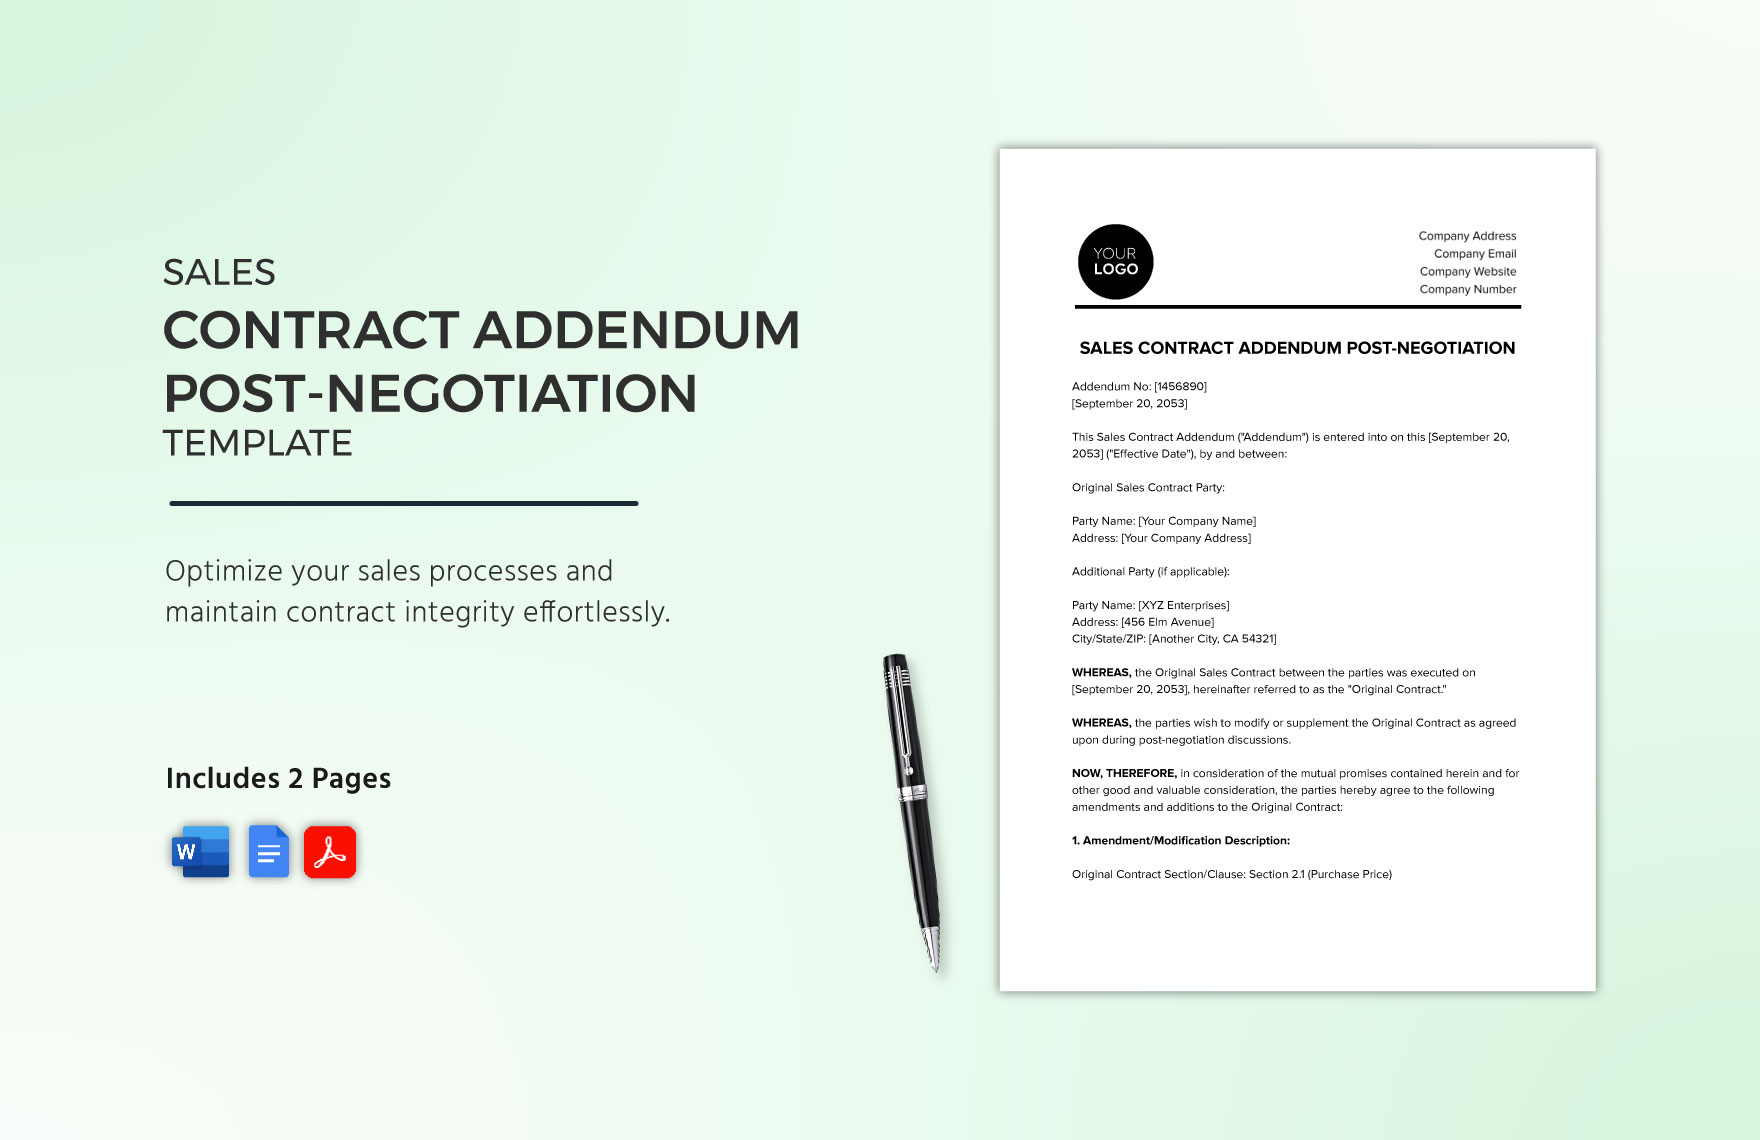 Sales Contract Addendum Post-Negotiation Template